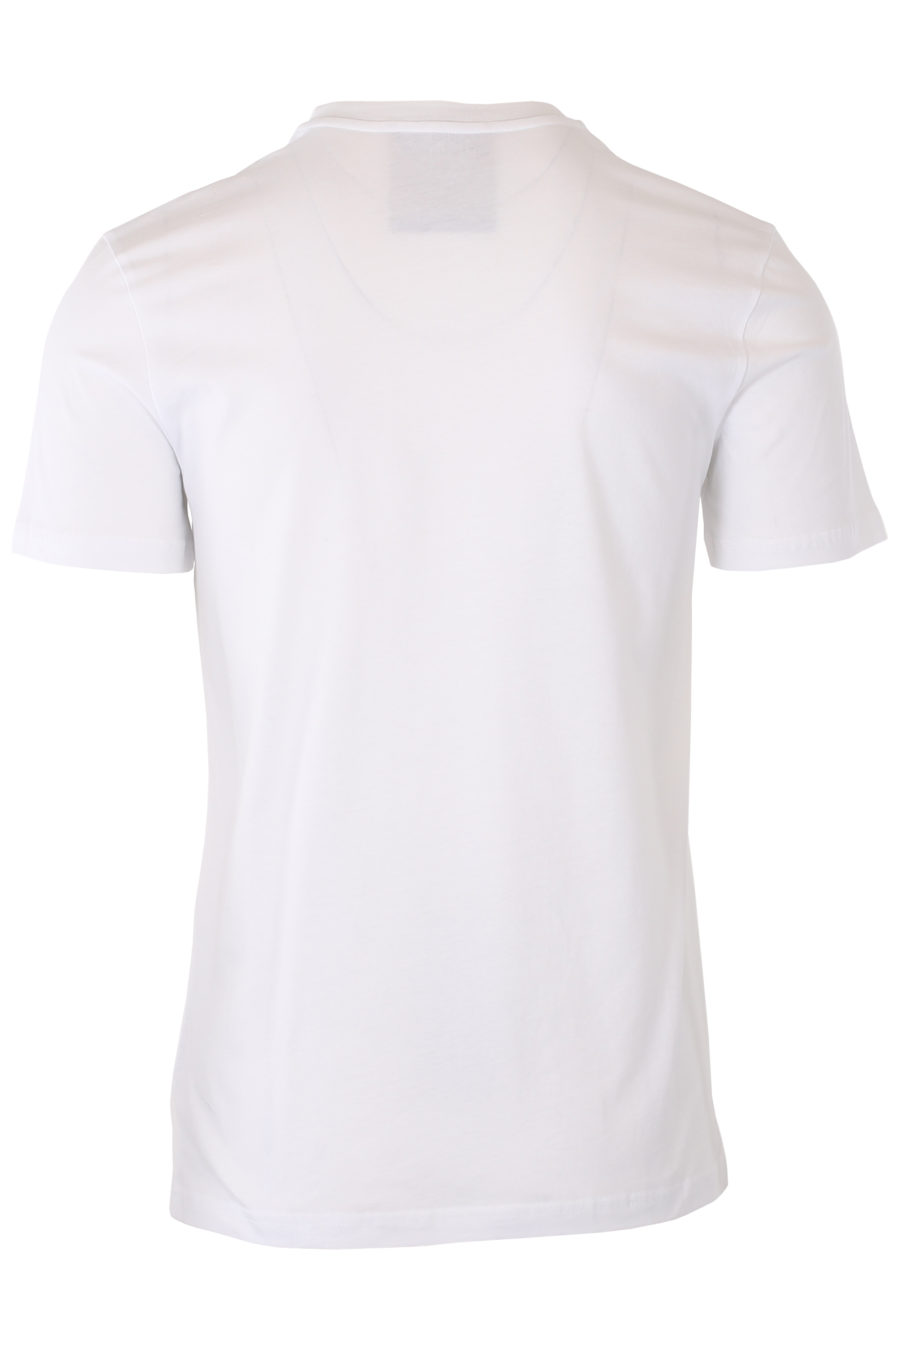 Camiseta blanca con logo doble pregunta milano grande - IMG 9341